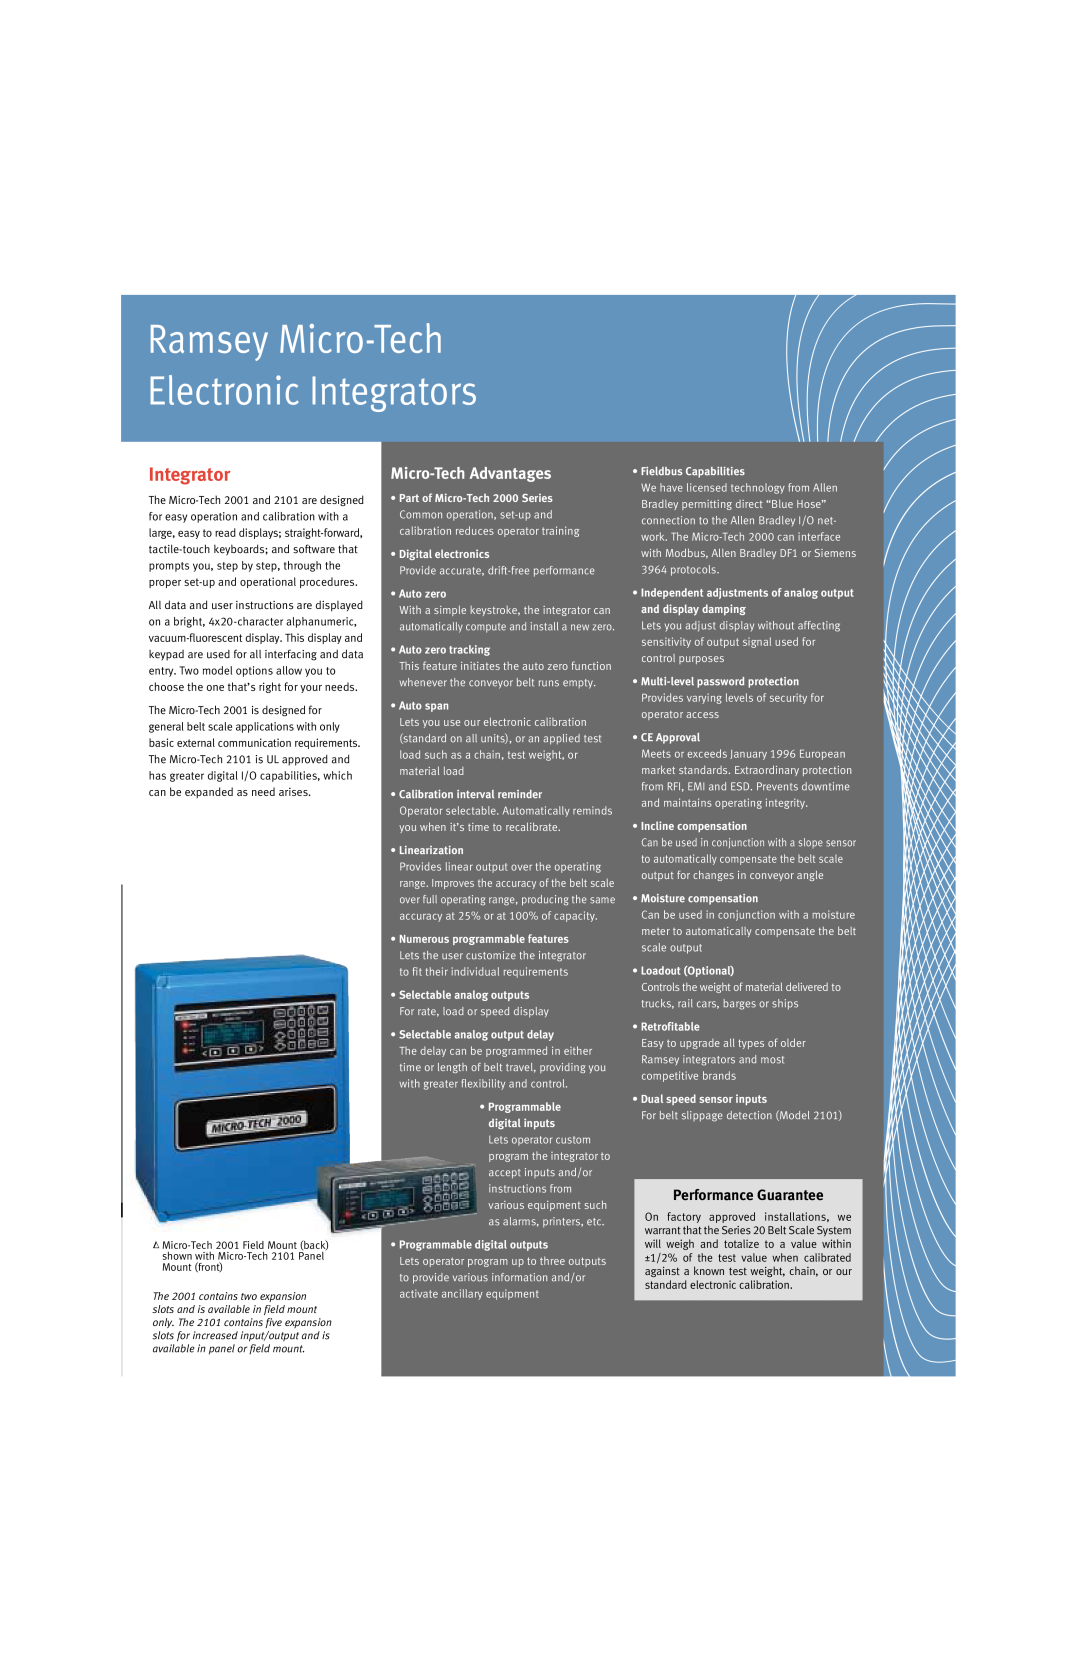 Thermo Products 20 Series manual Ramsey Micro-Tech Electronic Integrators, Micro-Tech Advantages, Performance Guarantee 